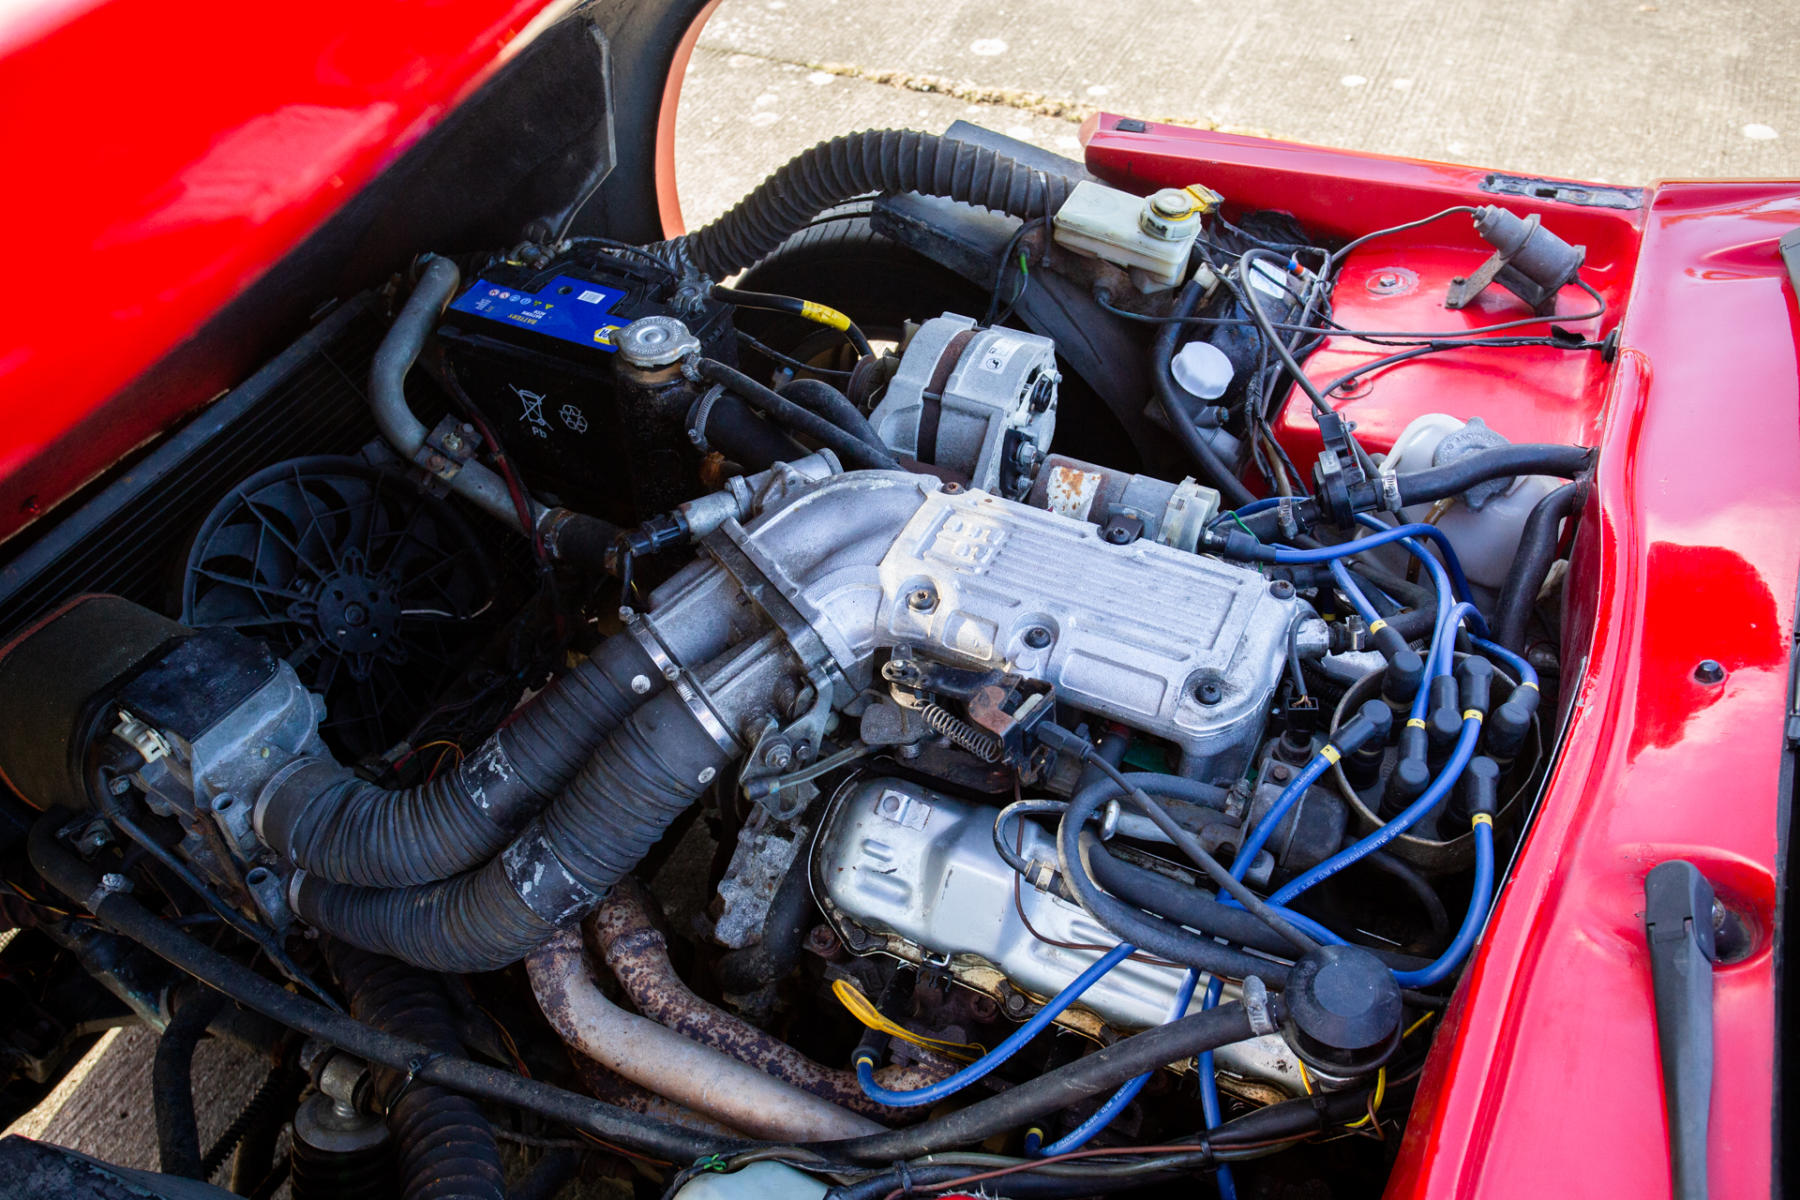 1989 TVR S2 engine